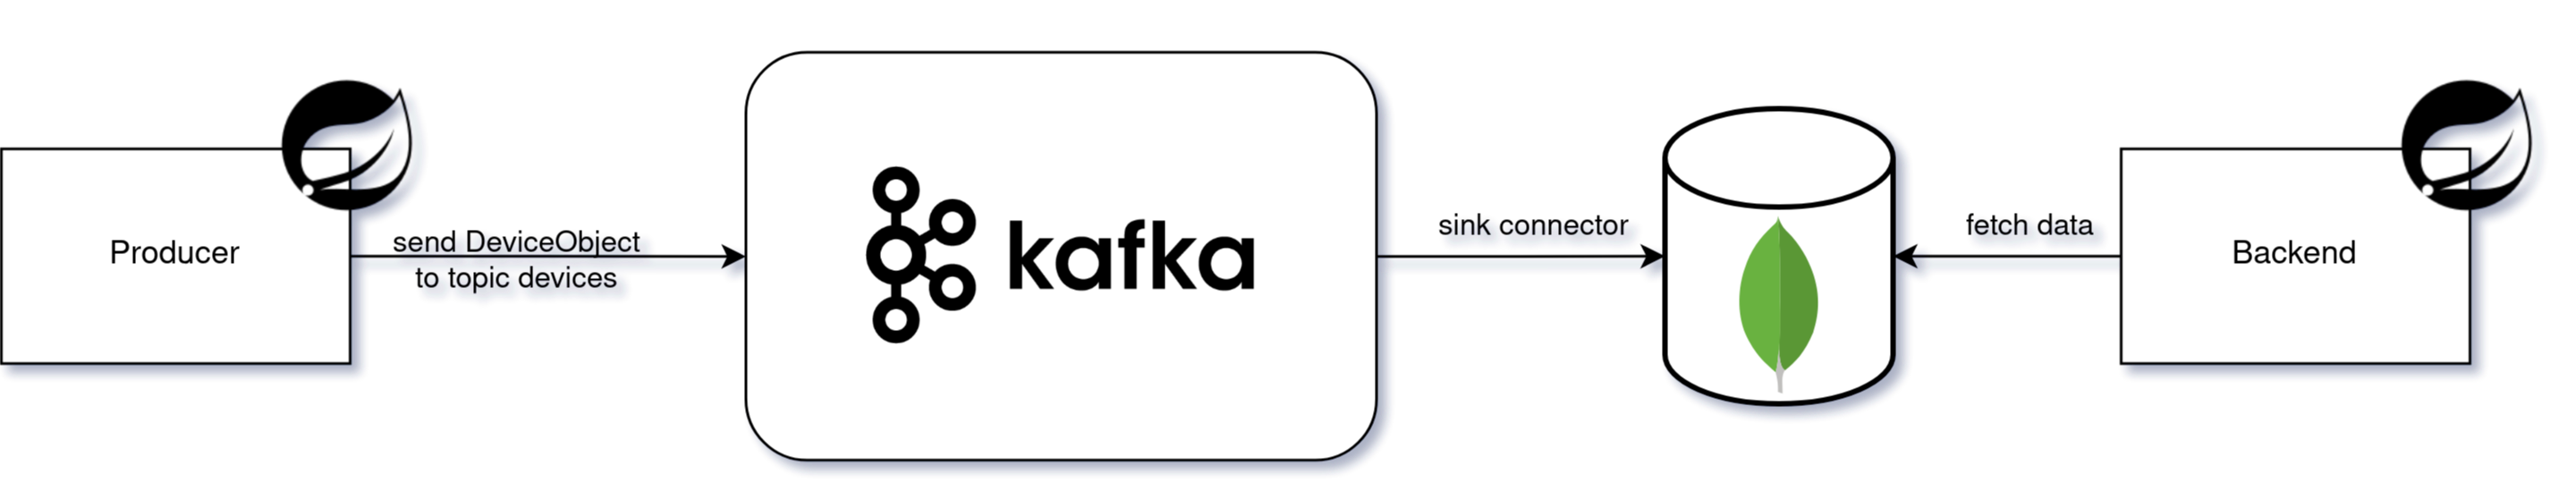 Kafka Microservice Diagram